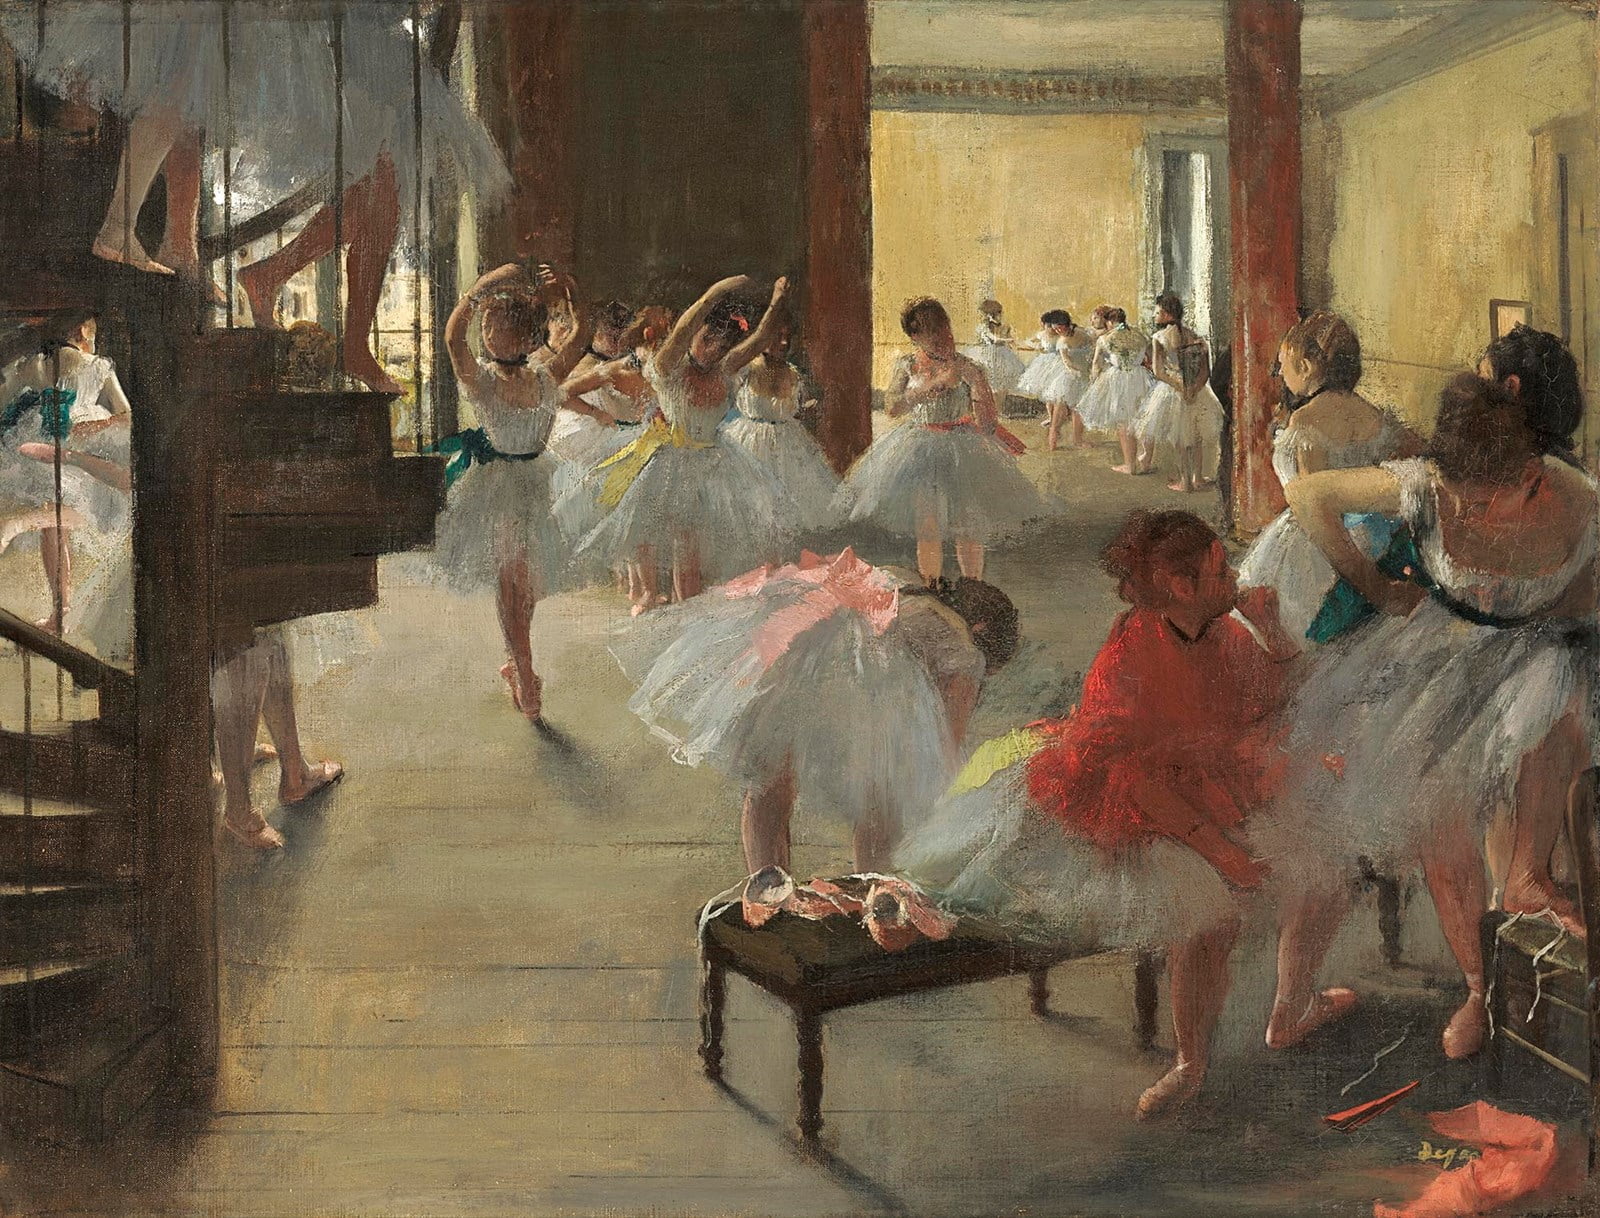 Edgar Degas The Dance Class C 1873 Oil On Canvas National Gallery Of Art Washington Corcoran 